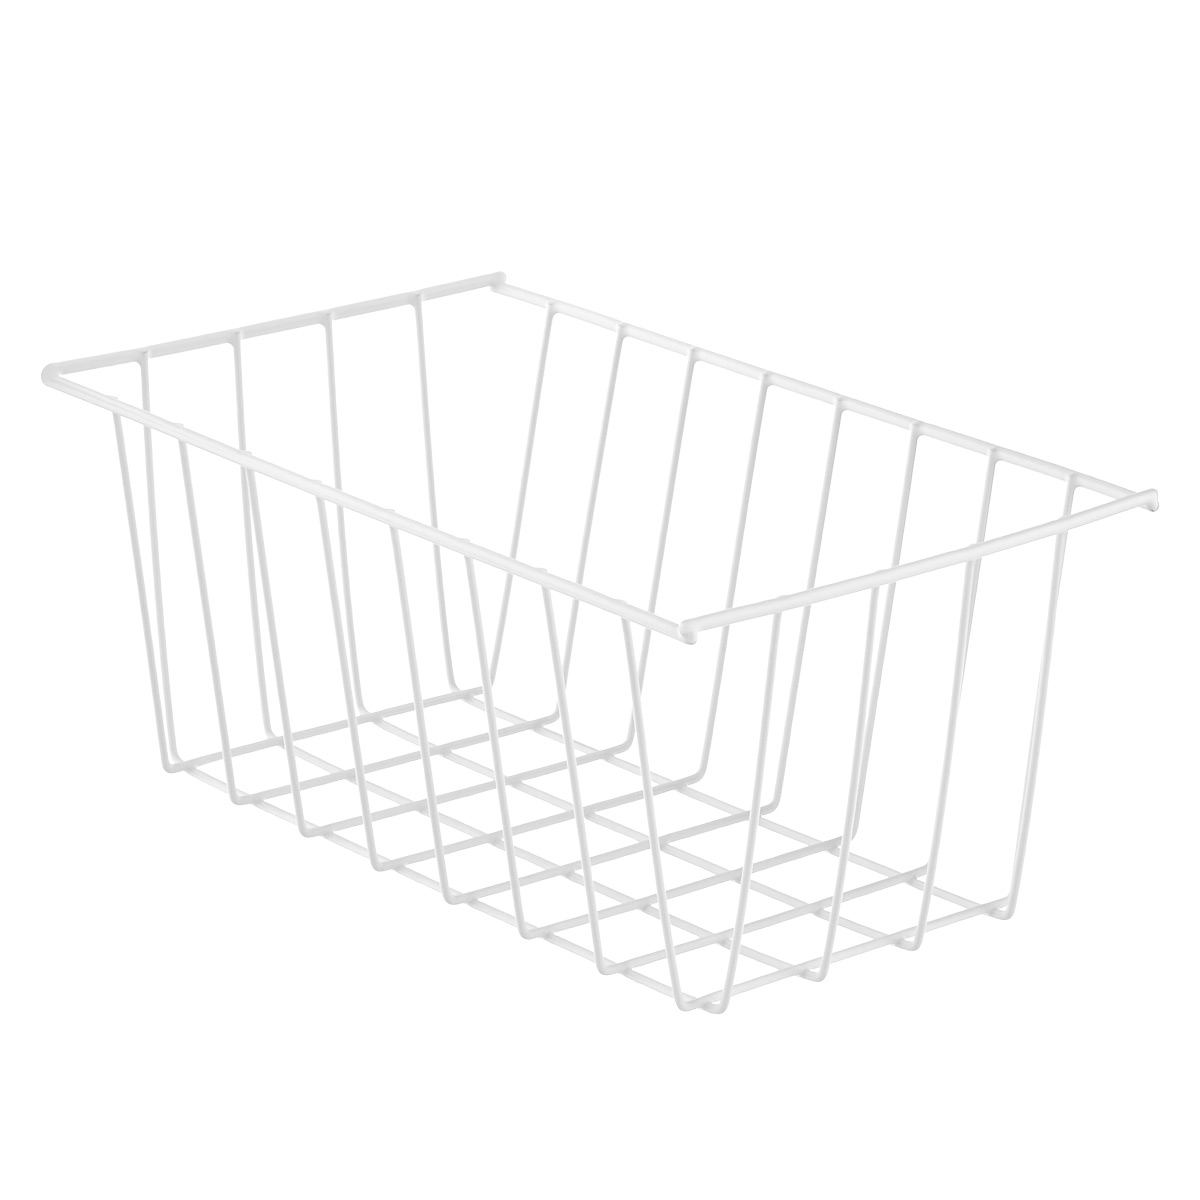 Design Ideas Freezer Storage Baskets | The Container Store